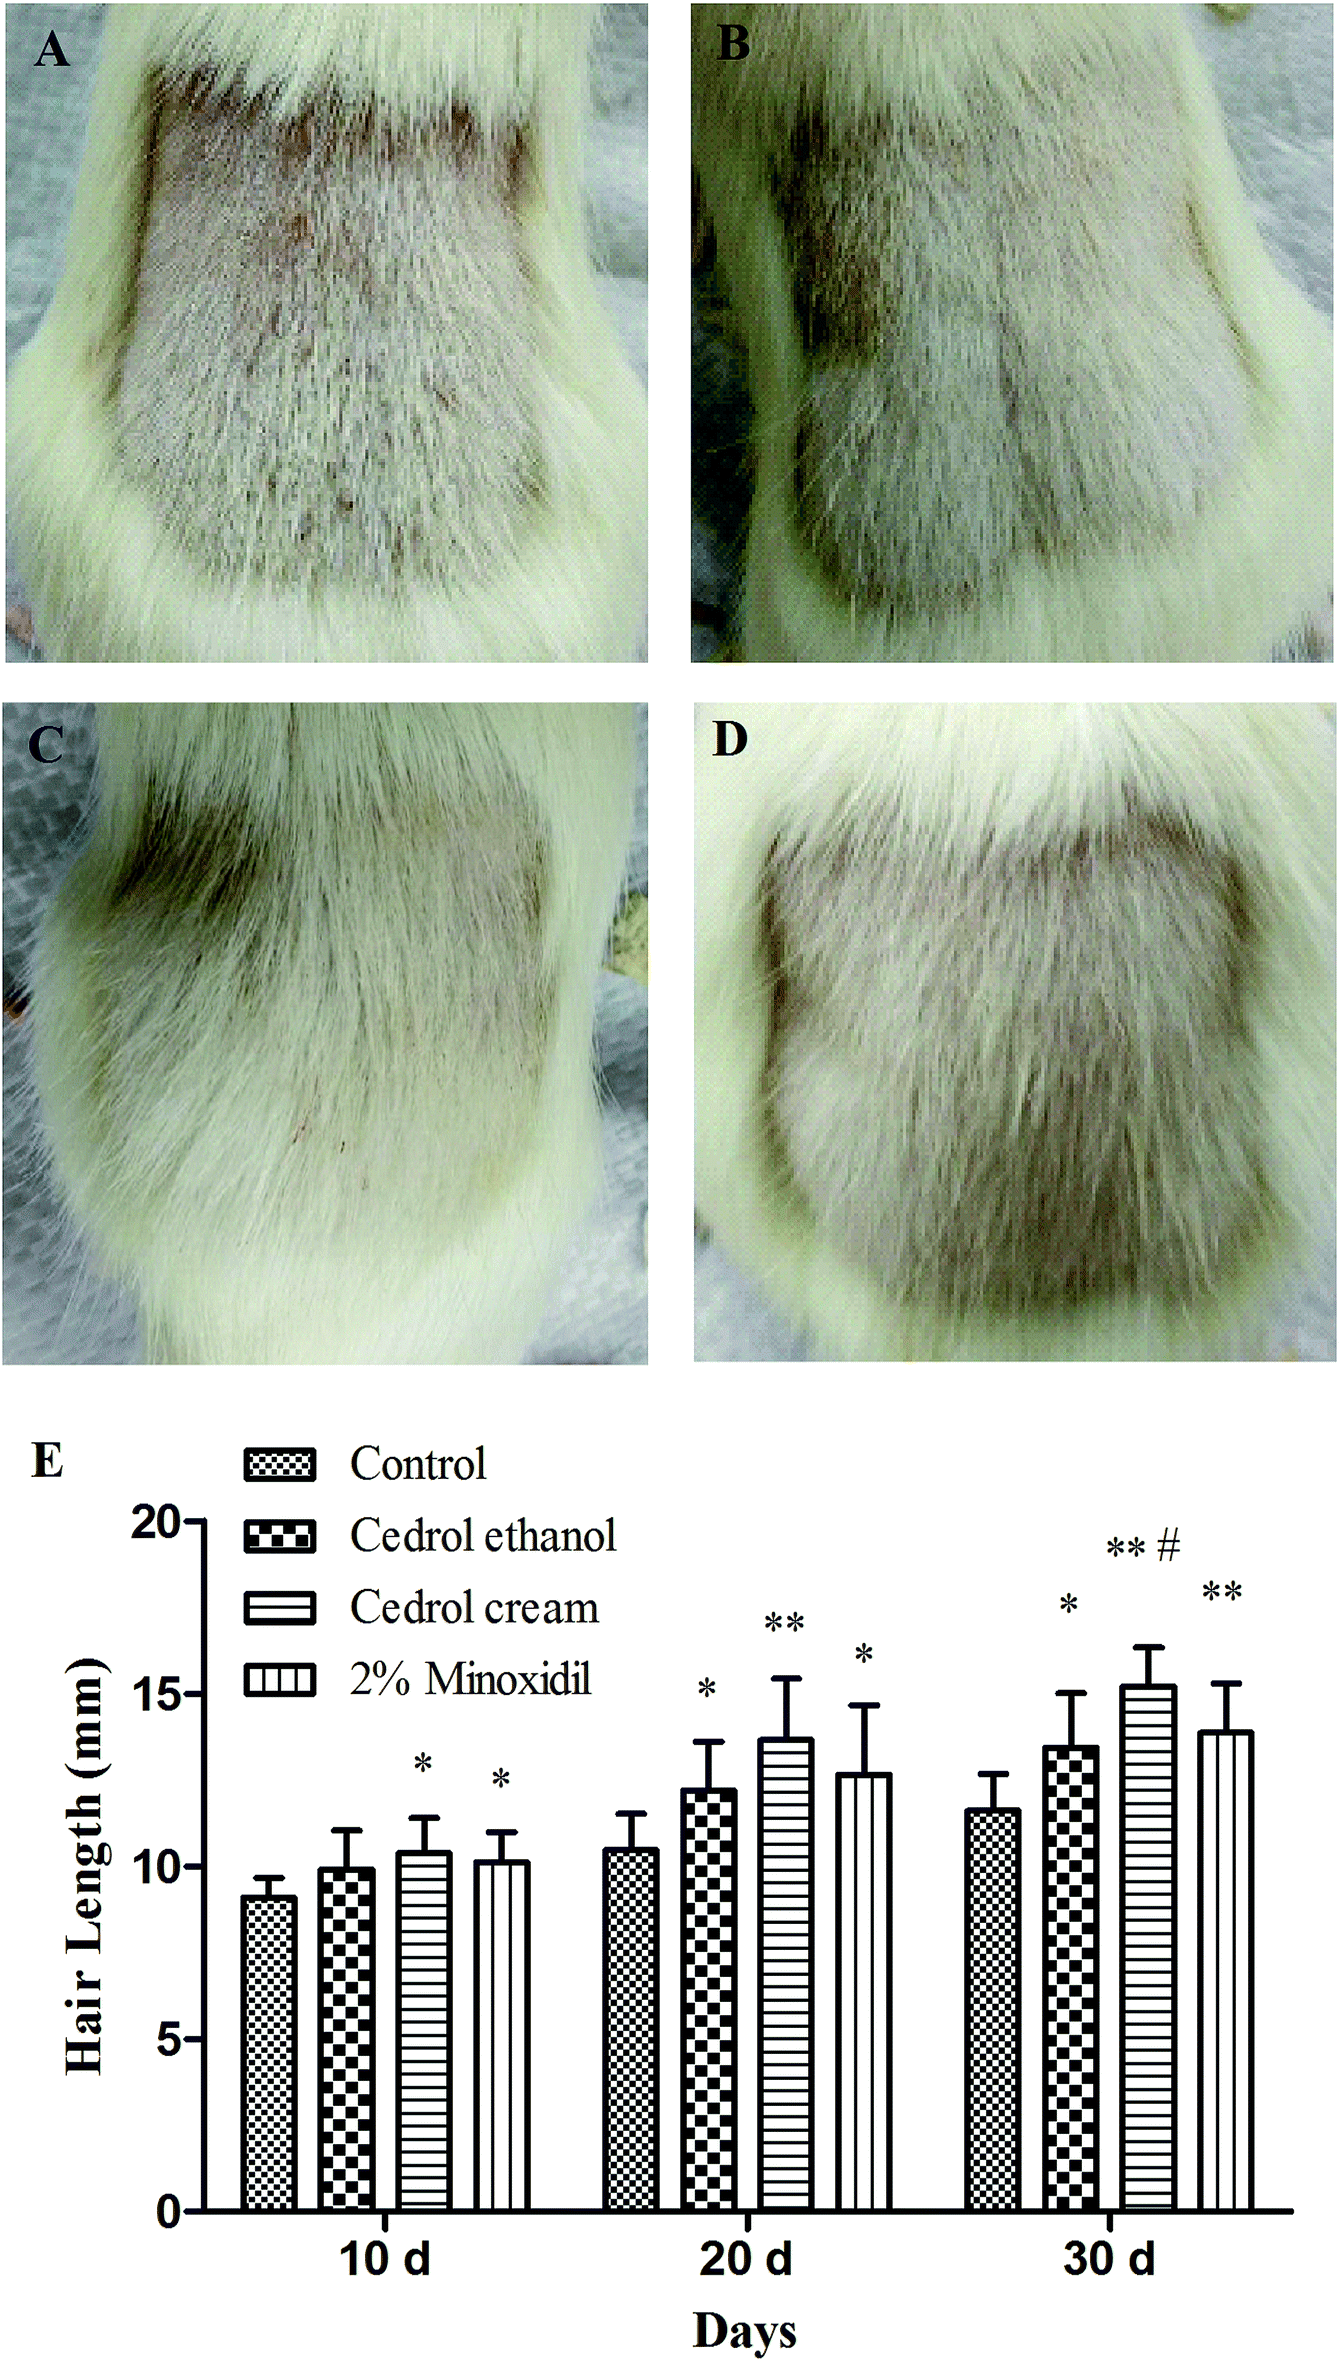 Hair growth promotion effect of cedrol cream and its  dermatopharmacokinetics - RSC Advances (RSC Publishing)  DOI:10.1039/C8RA08667B